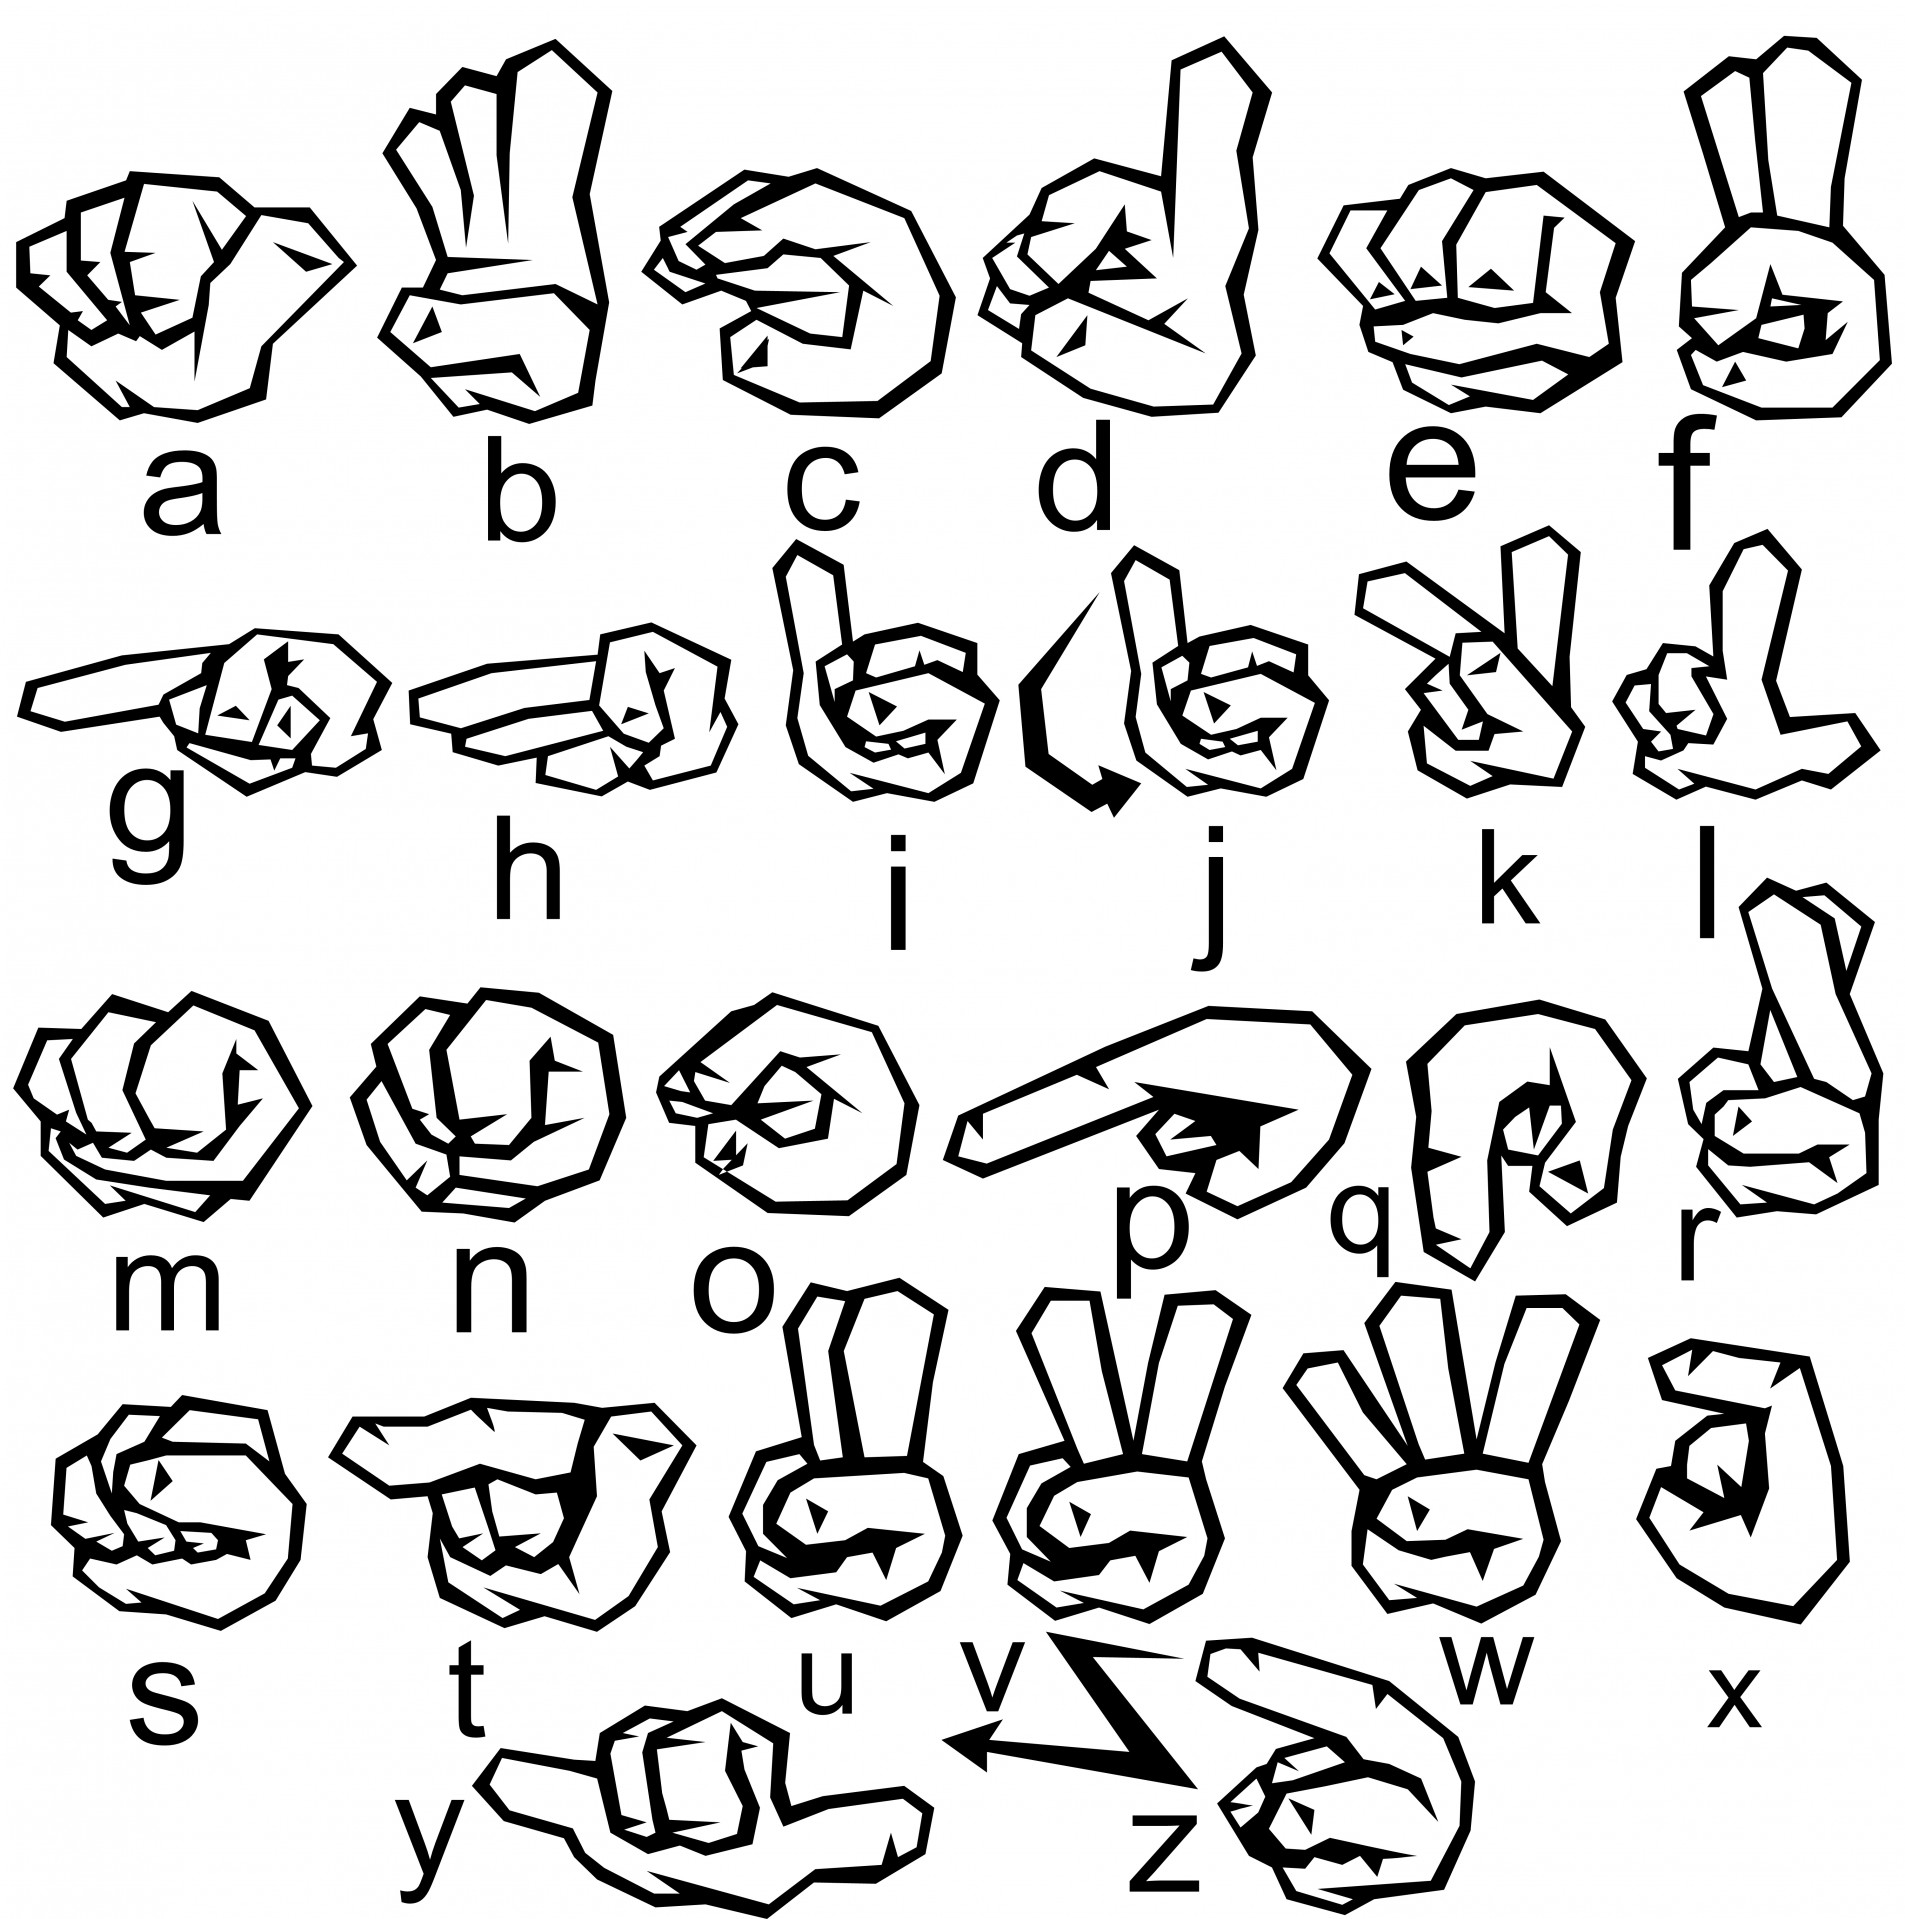 Download Free Photo Of Set Sign Language Fist Black From Needpix Com